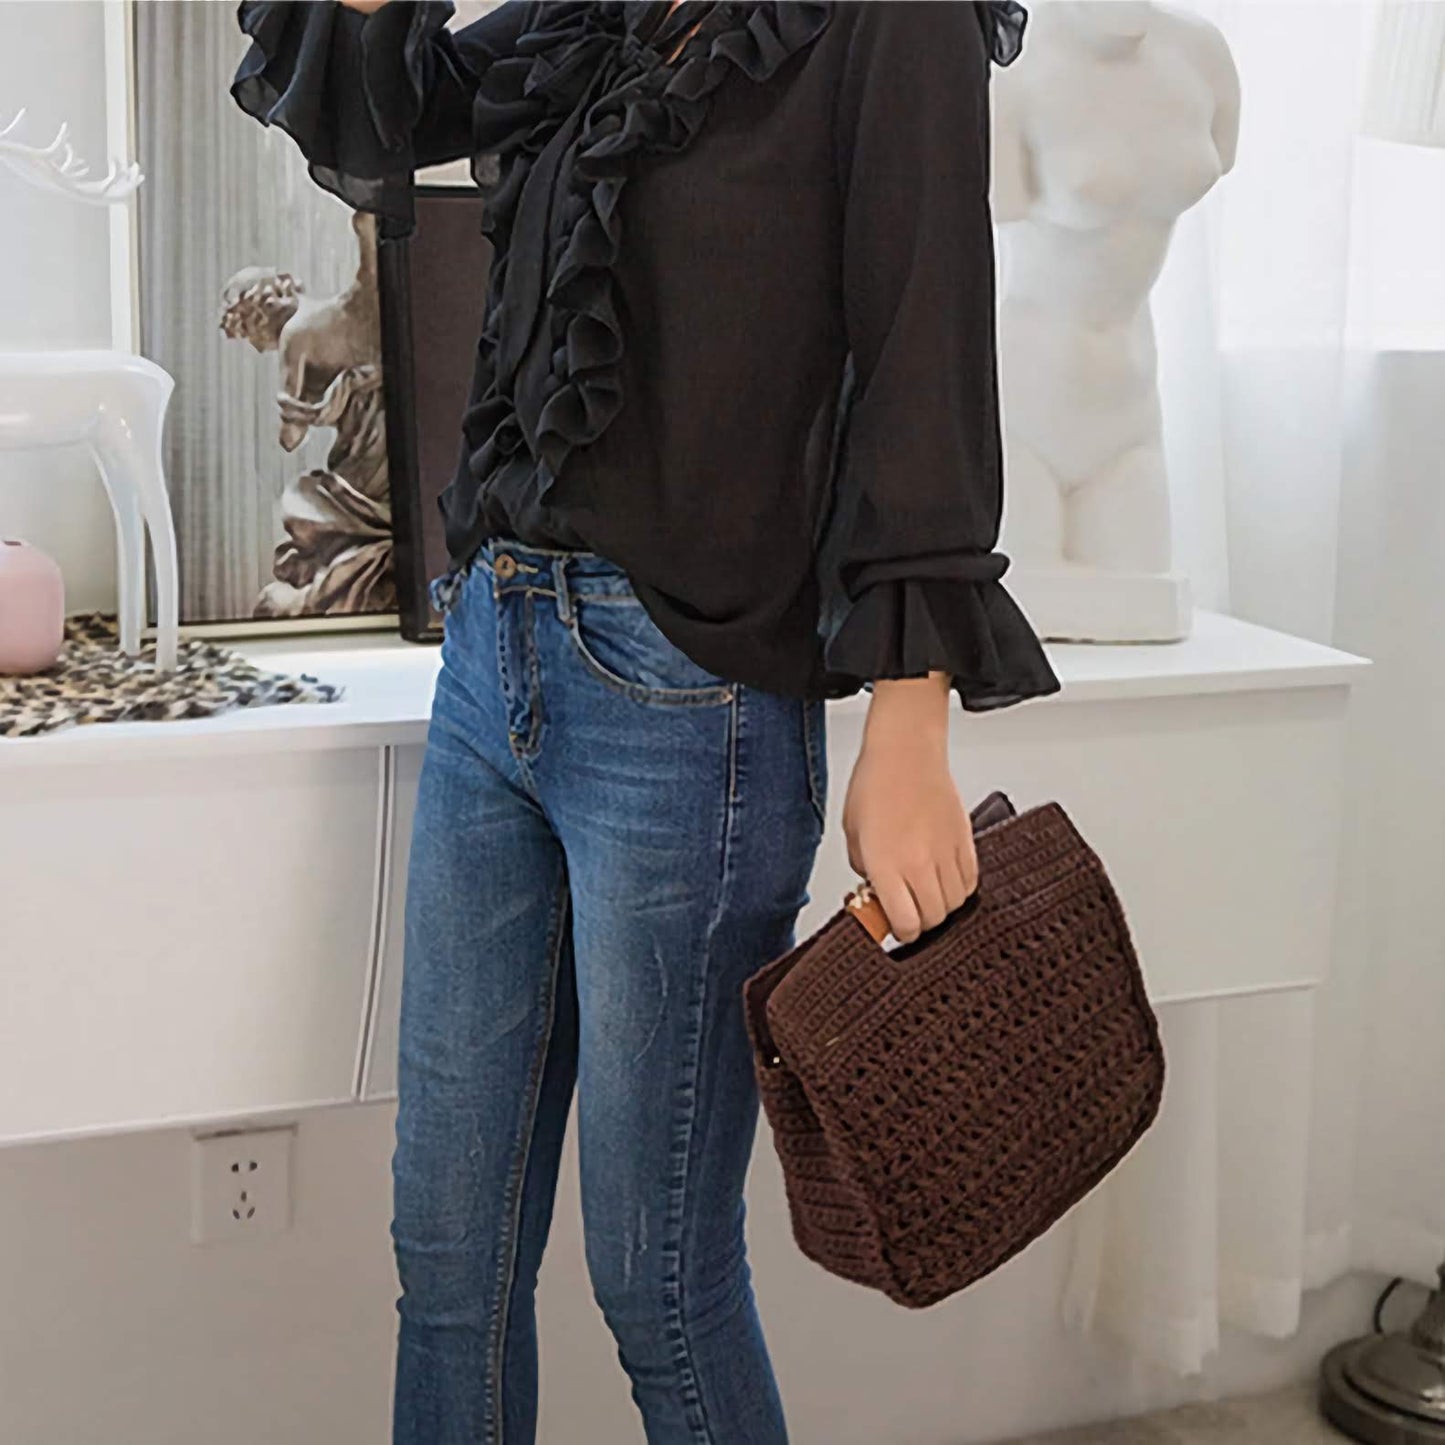 Crochet Woven Handbag Brown